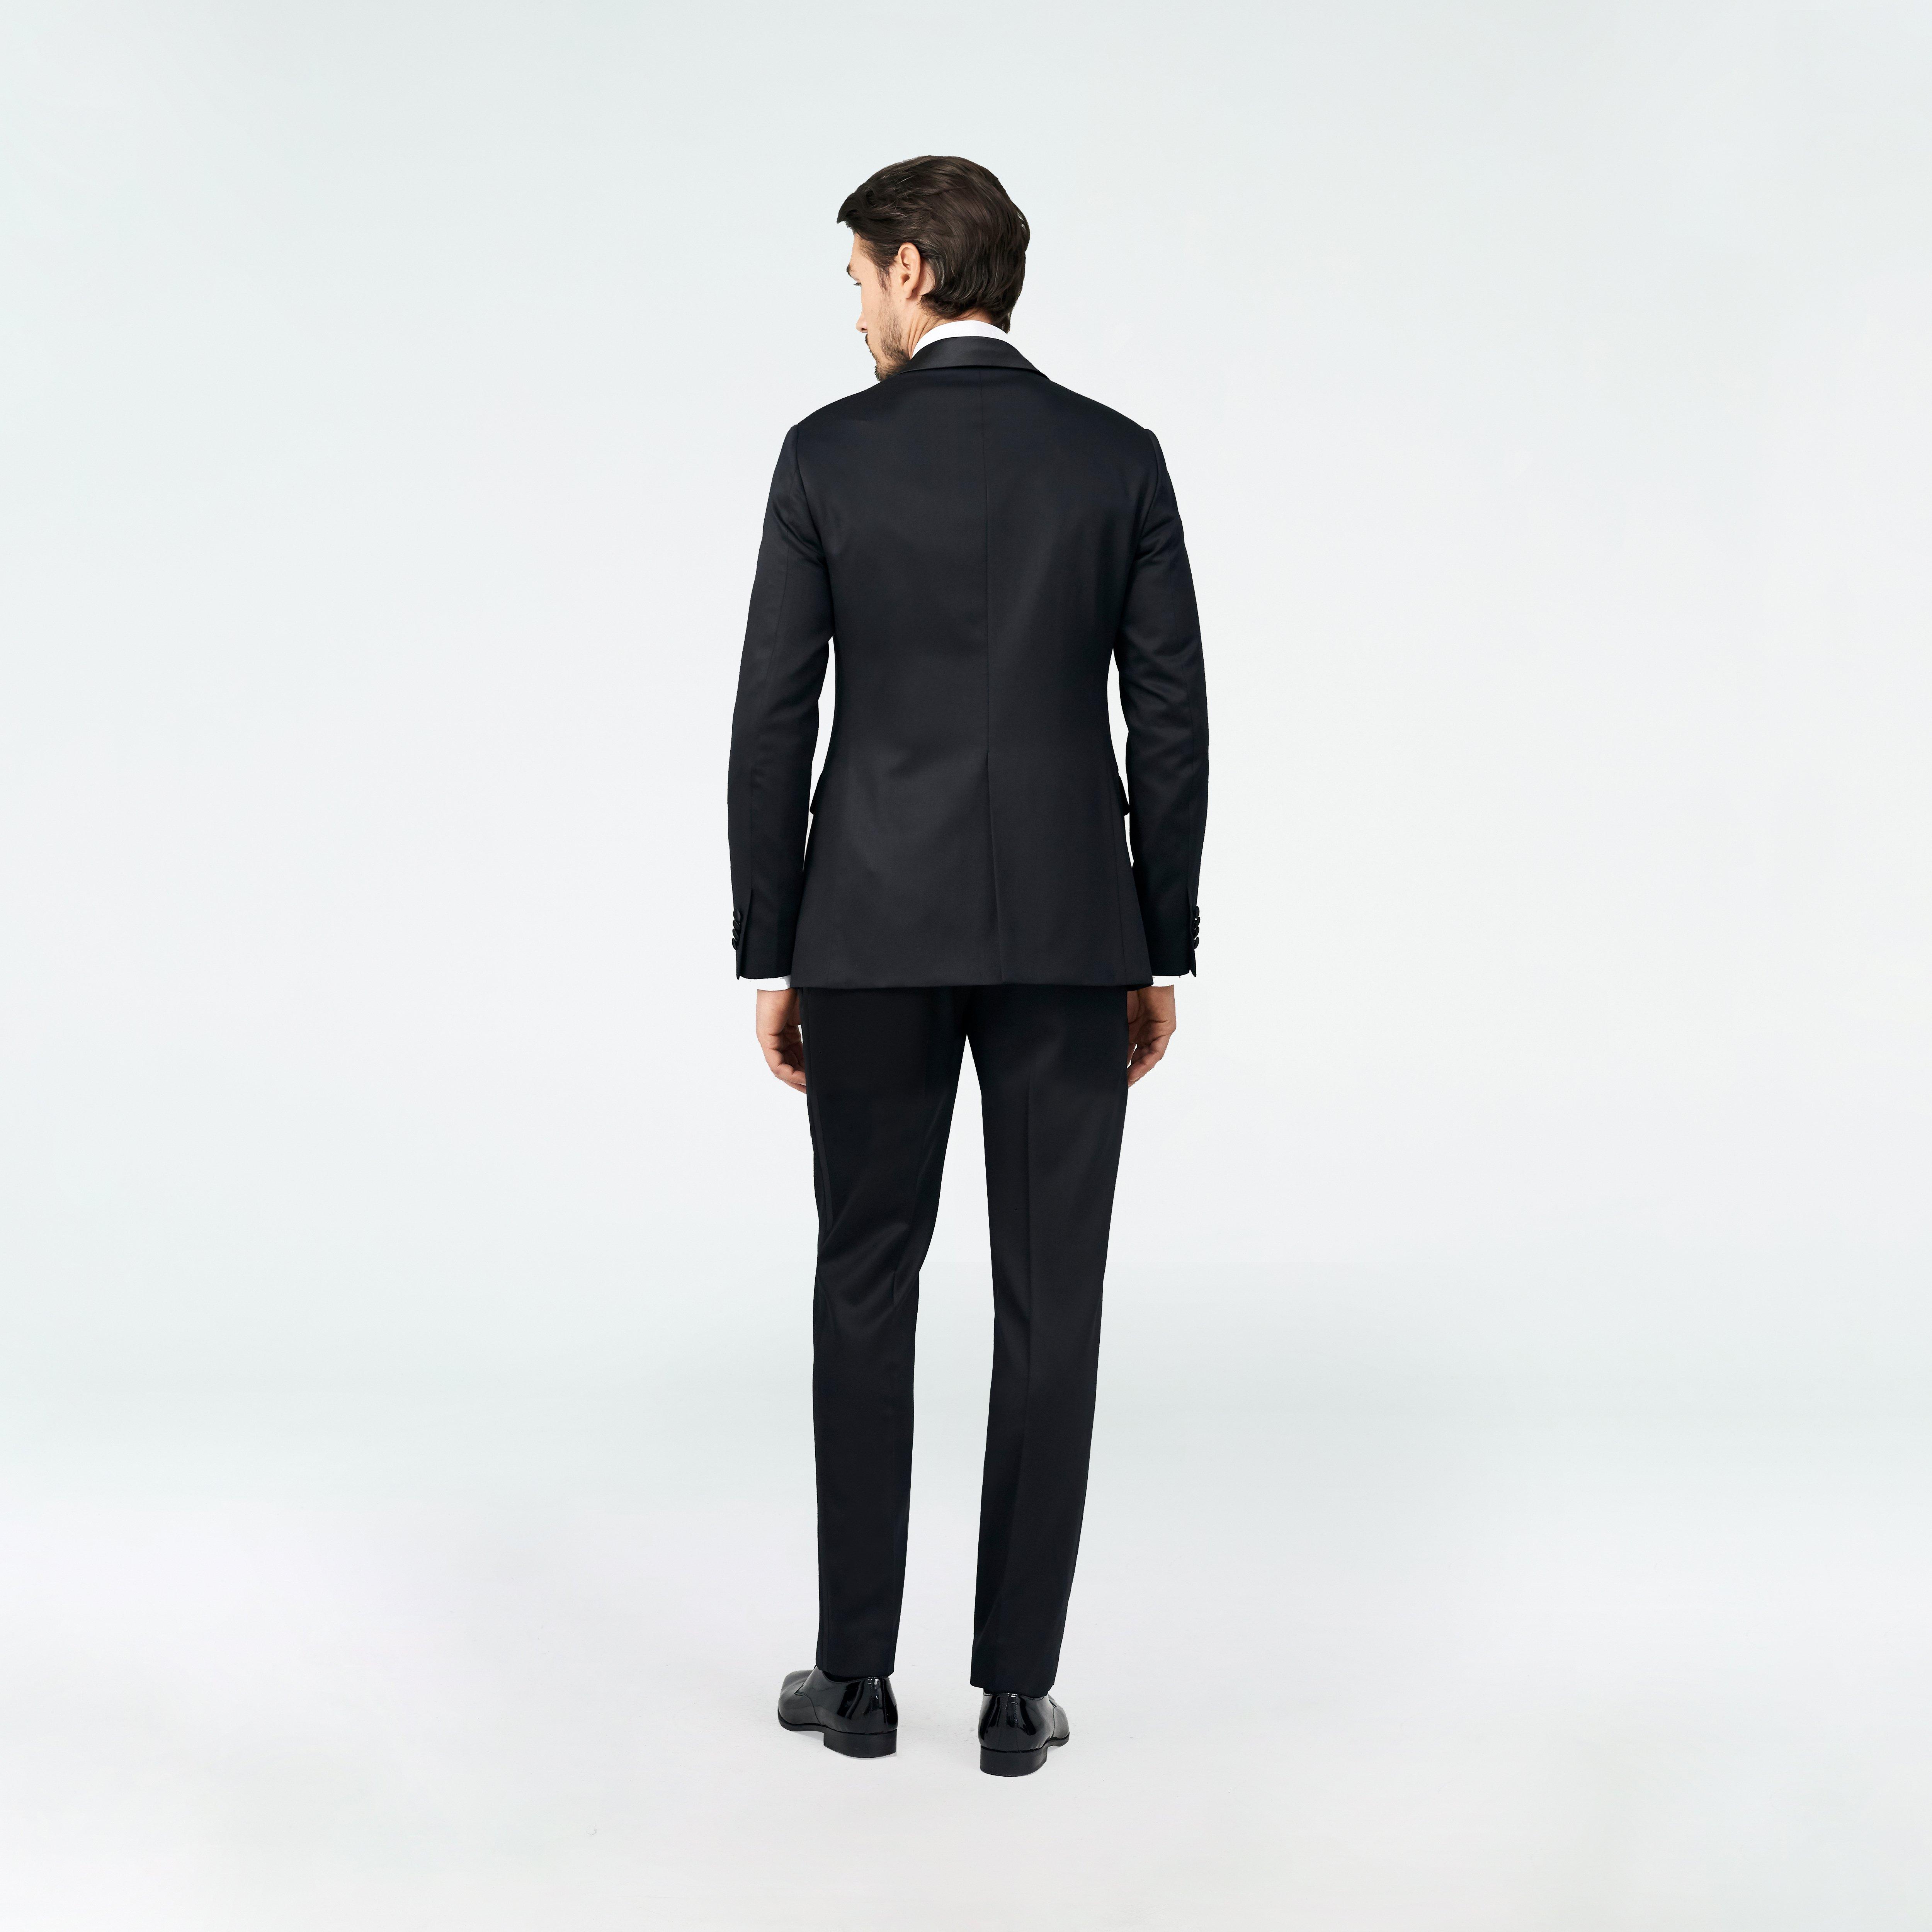 Custom Suits Made For You - Hampton Black Tuxedo | INDOCHINO